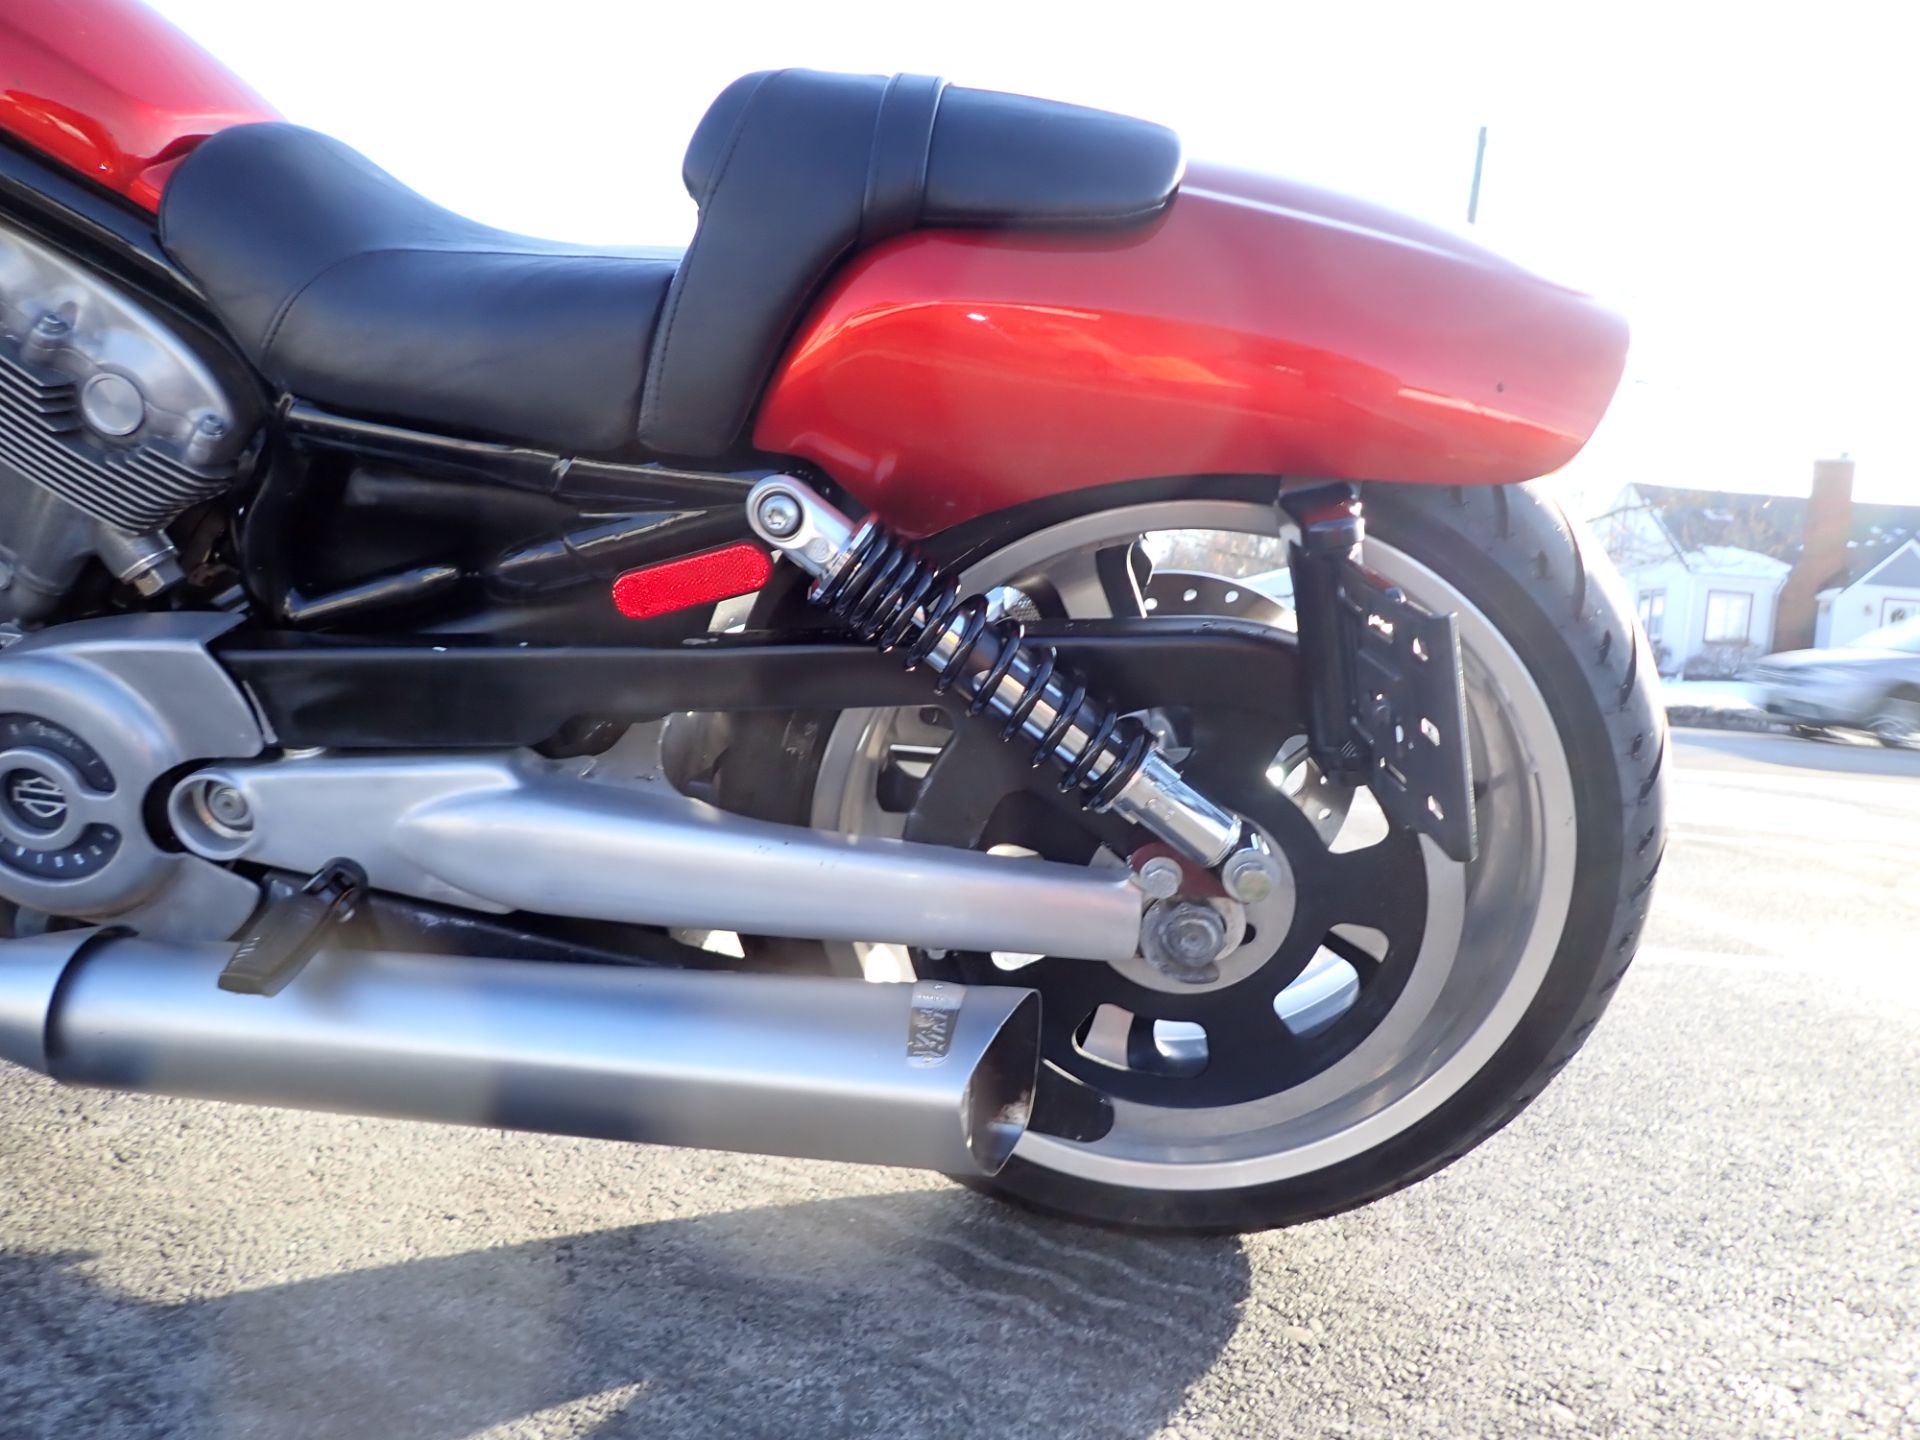 2013 Harley-Davidson V-Rod Muscle® in Massillon, Ohio - Photo 7